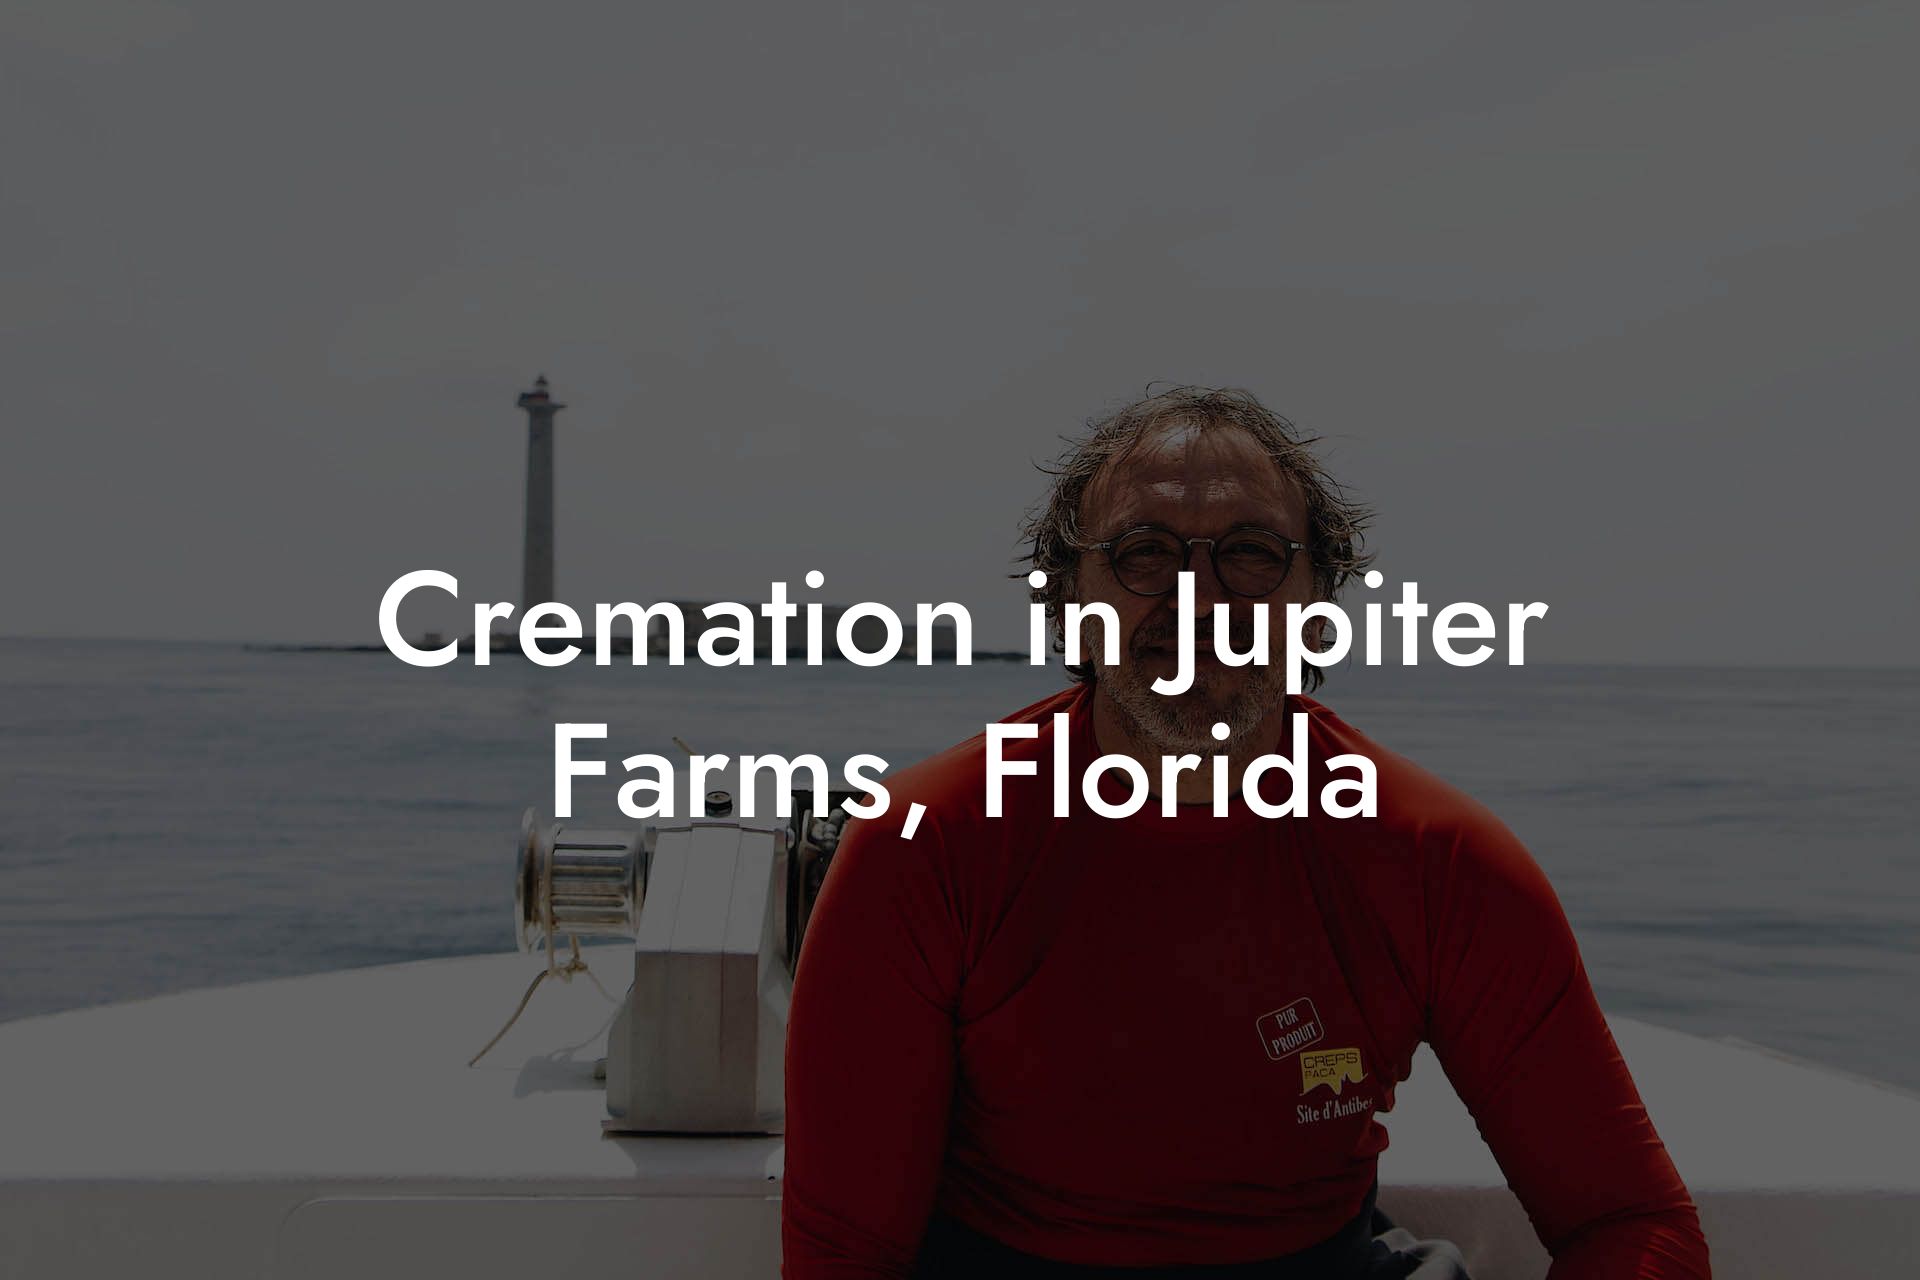 Cremation in Jupiter Farms, Florida